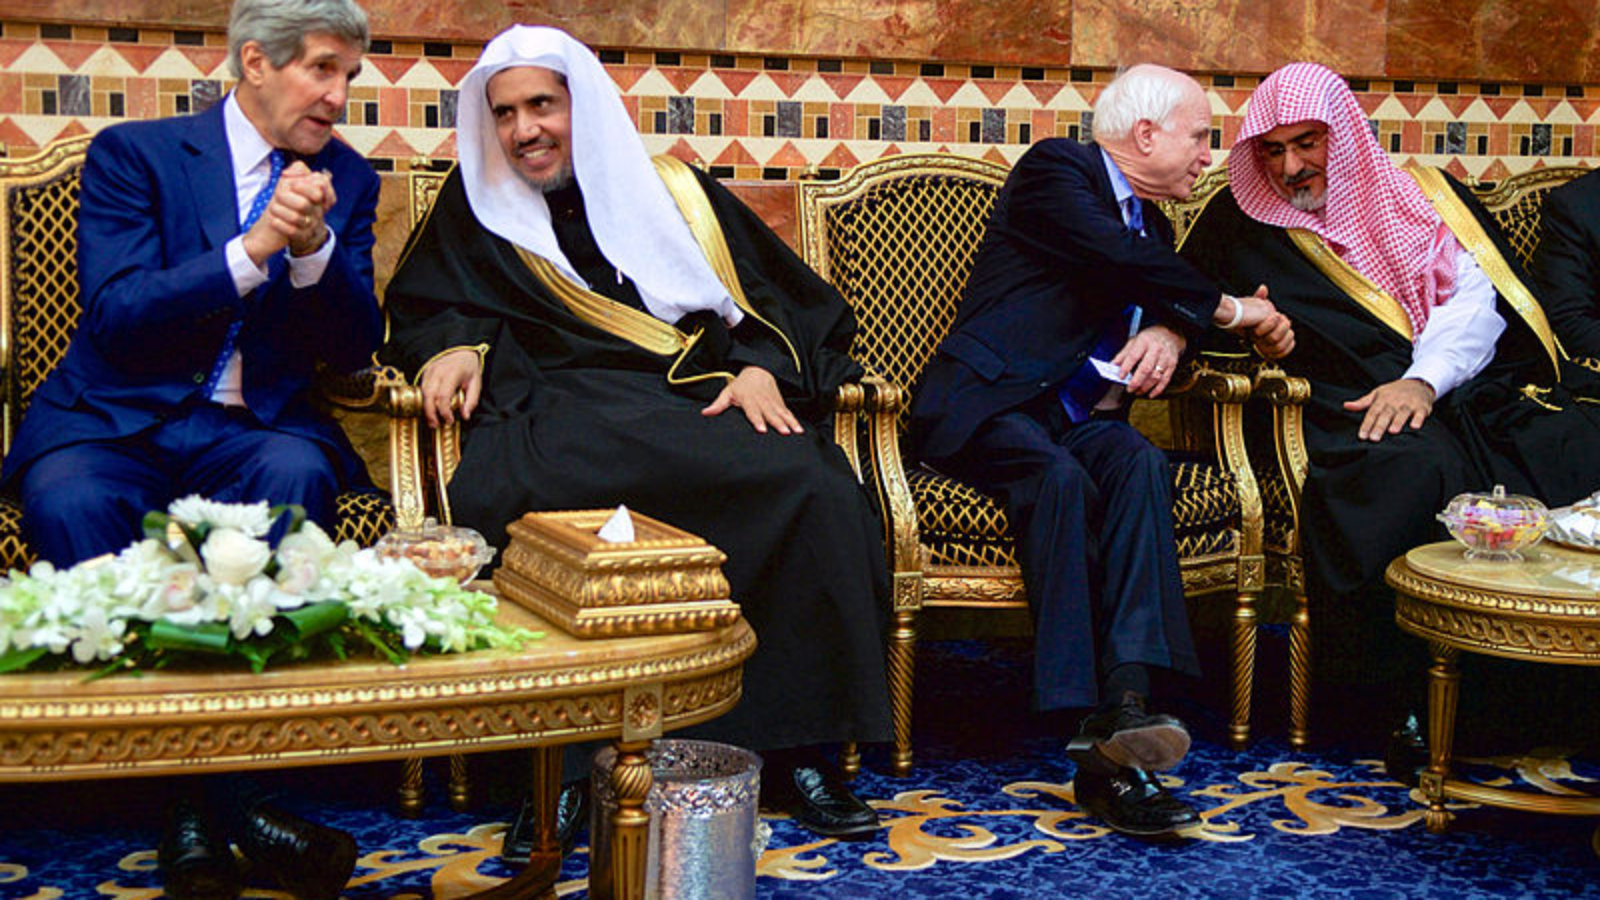 Secretary_Kerry_and_Senator_McCain_Chat_With_Members_of_the_Saudi_Royal_Family.jpg